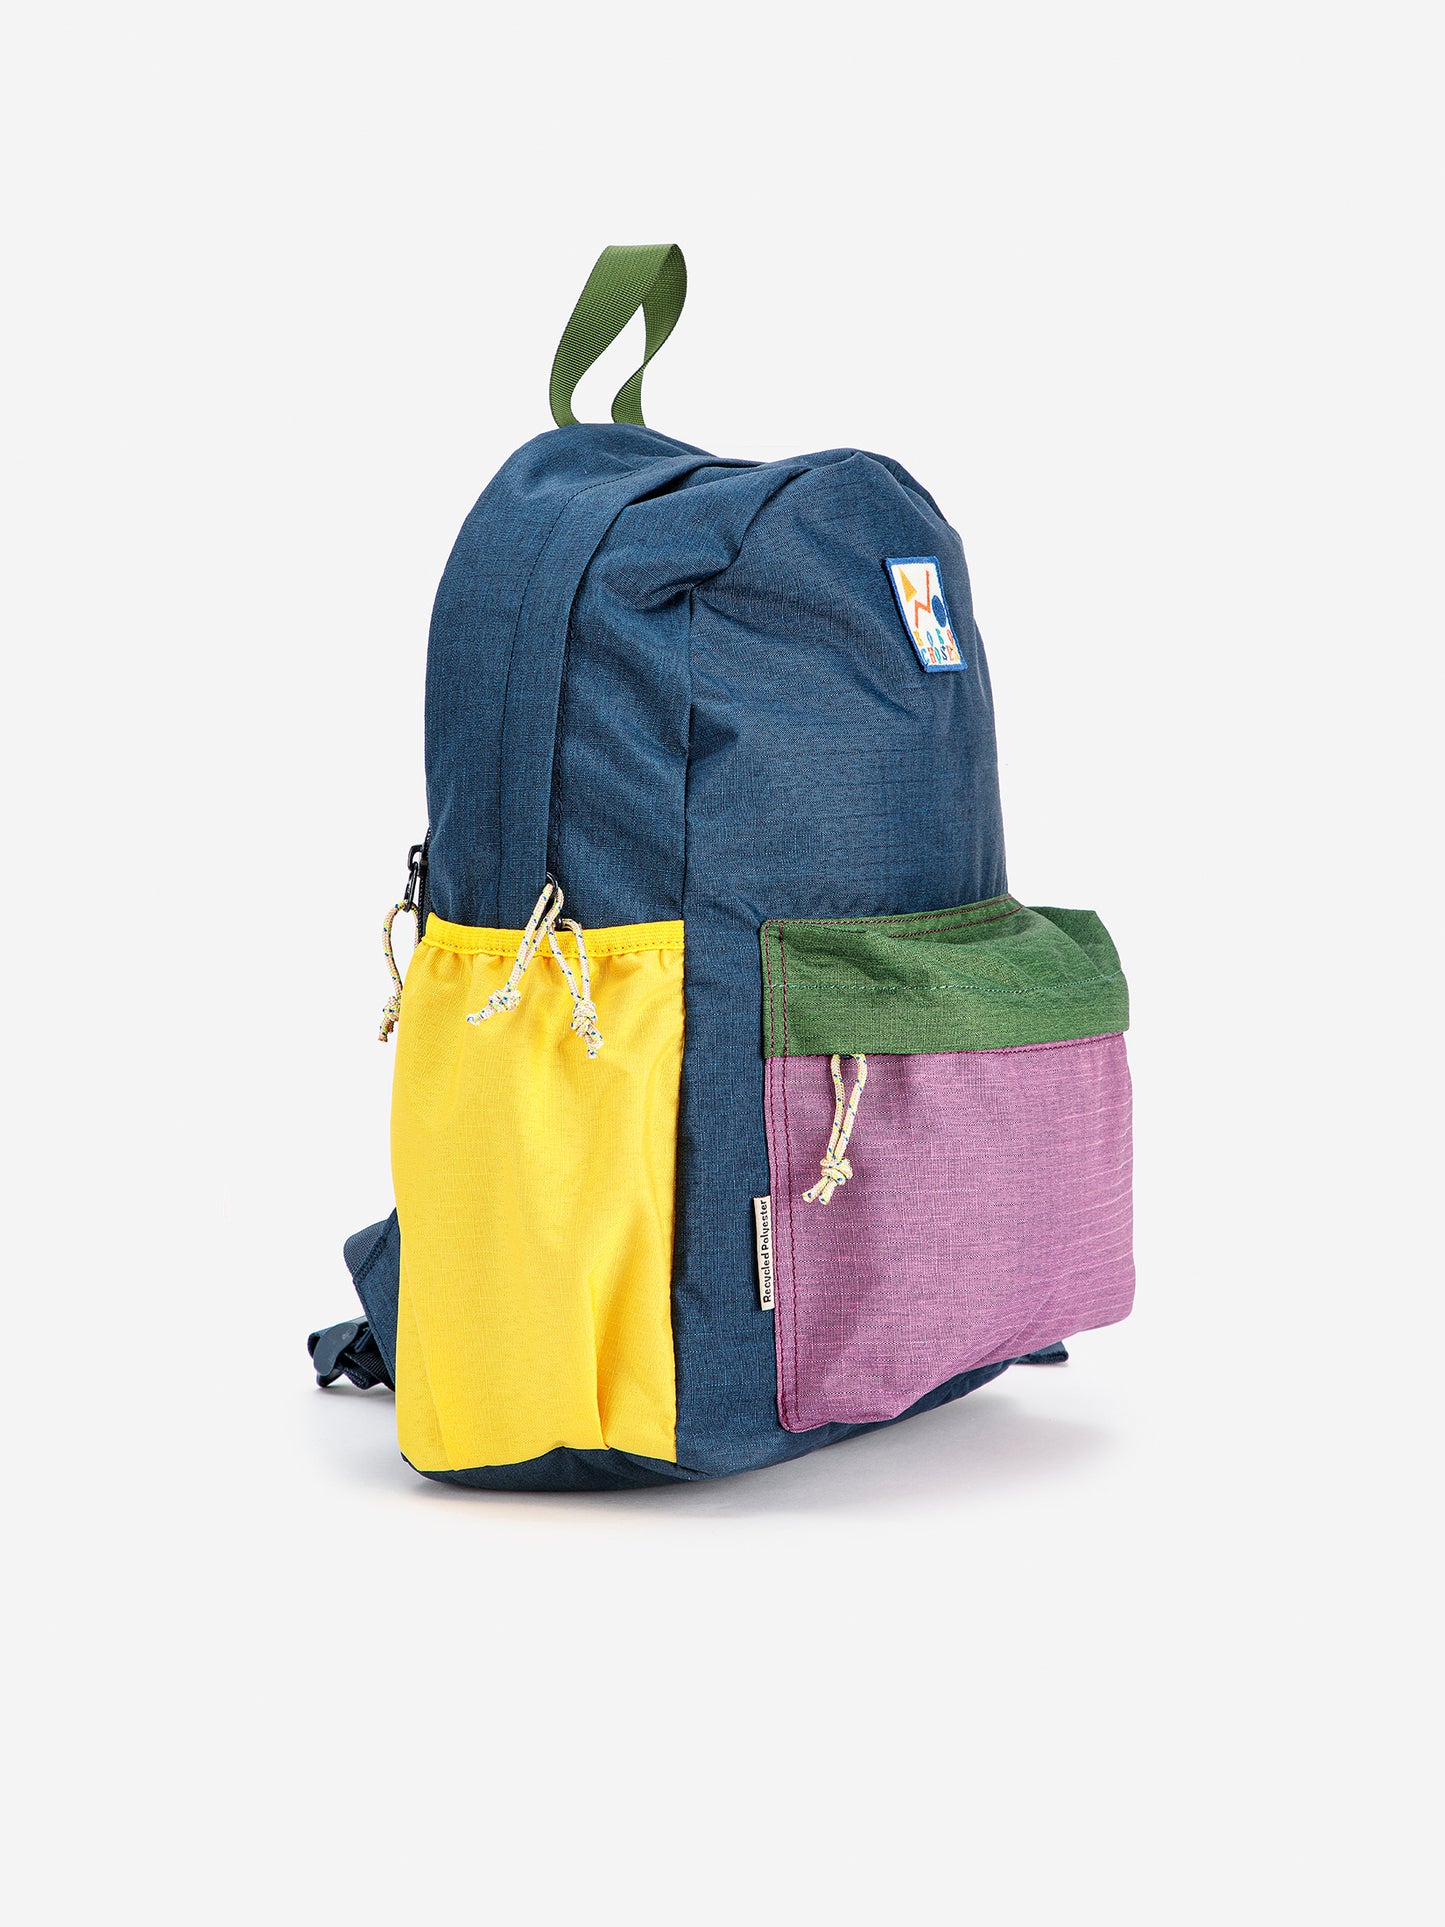 Color Block backpack